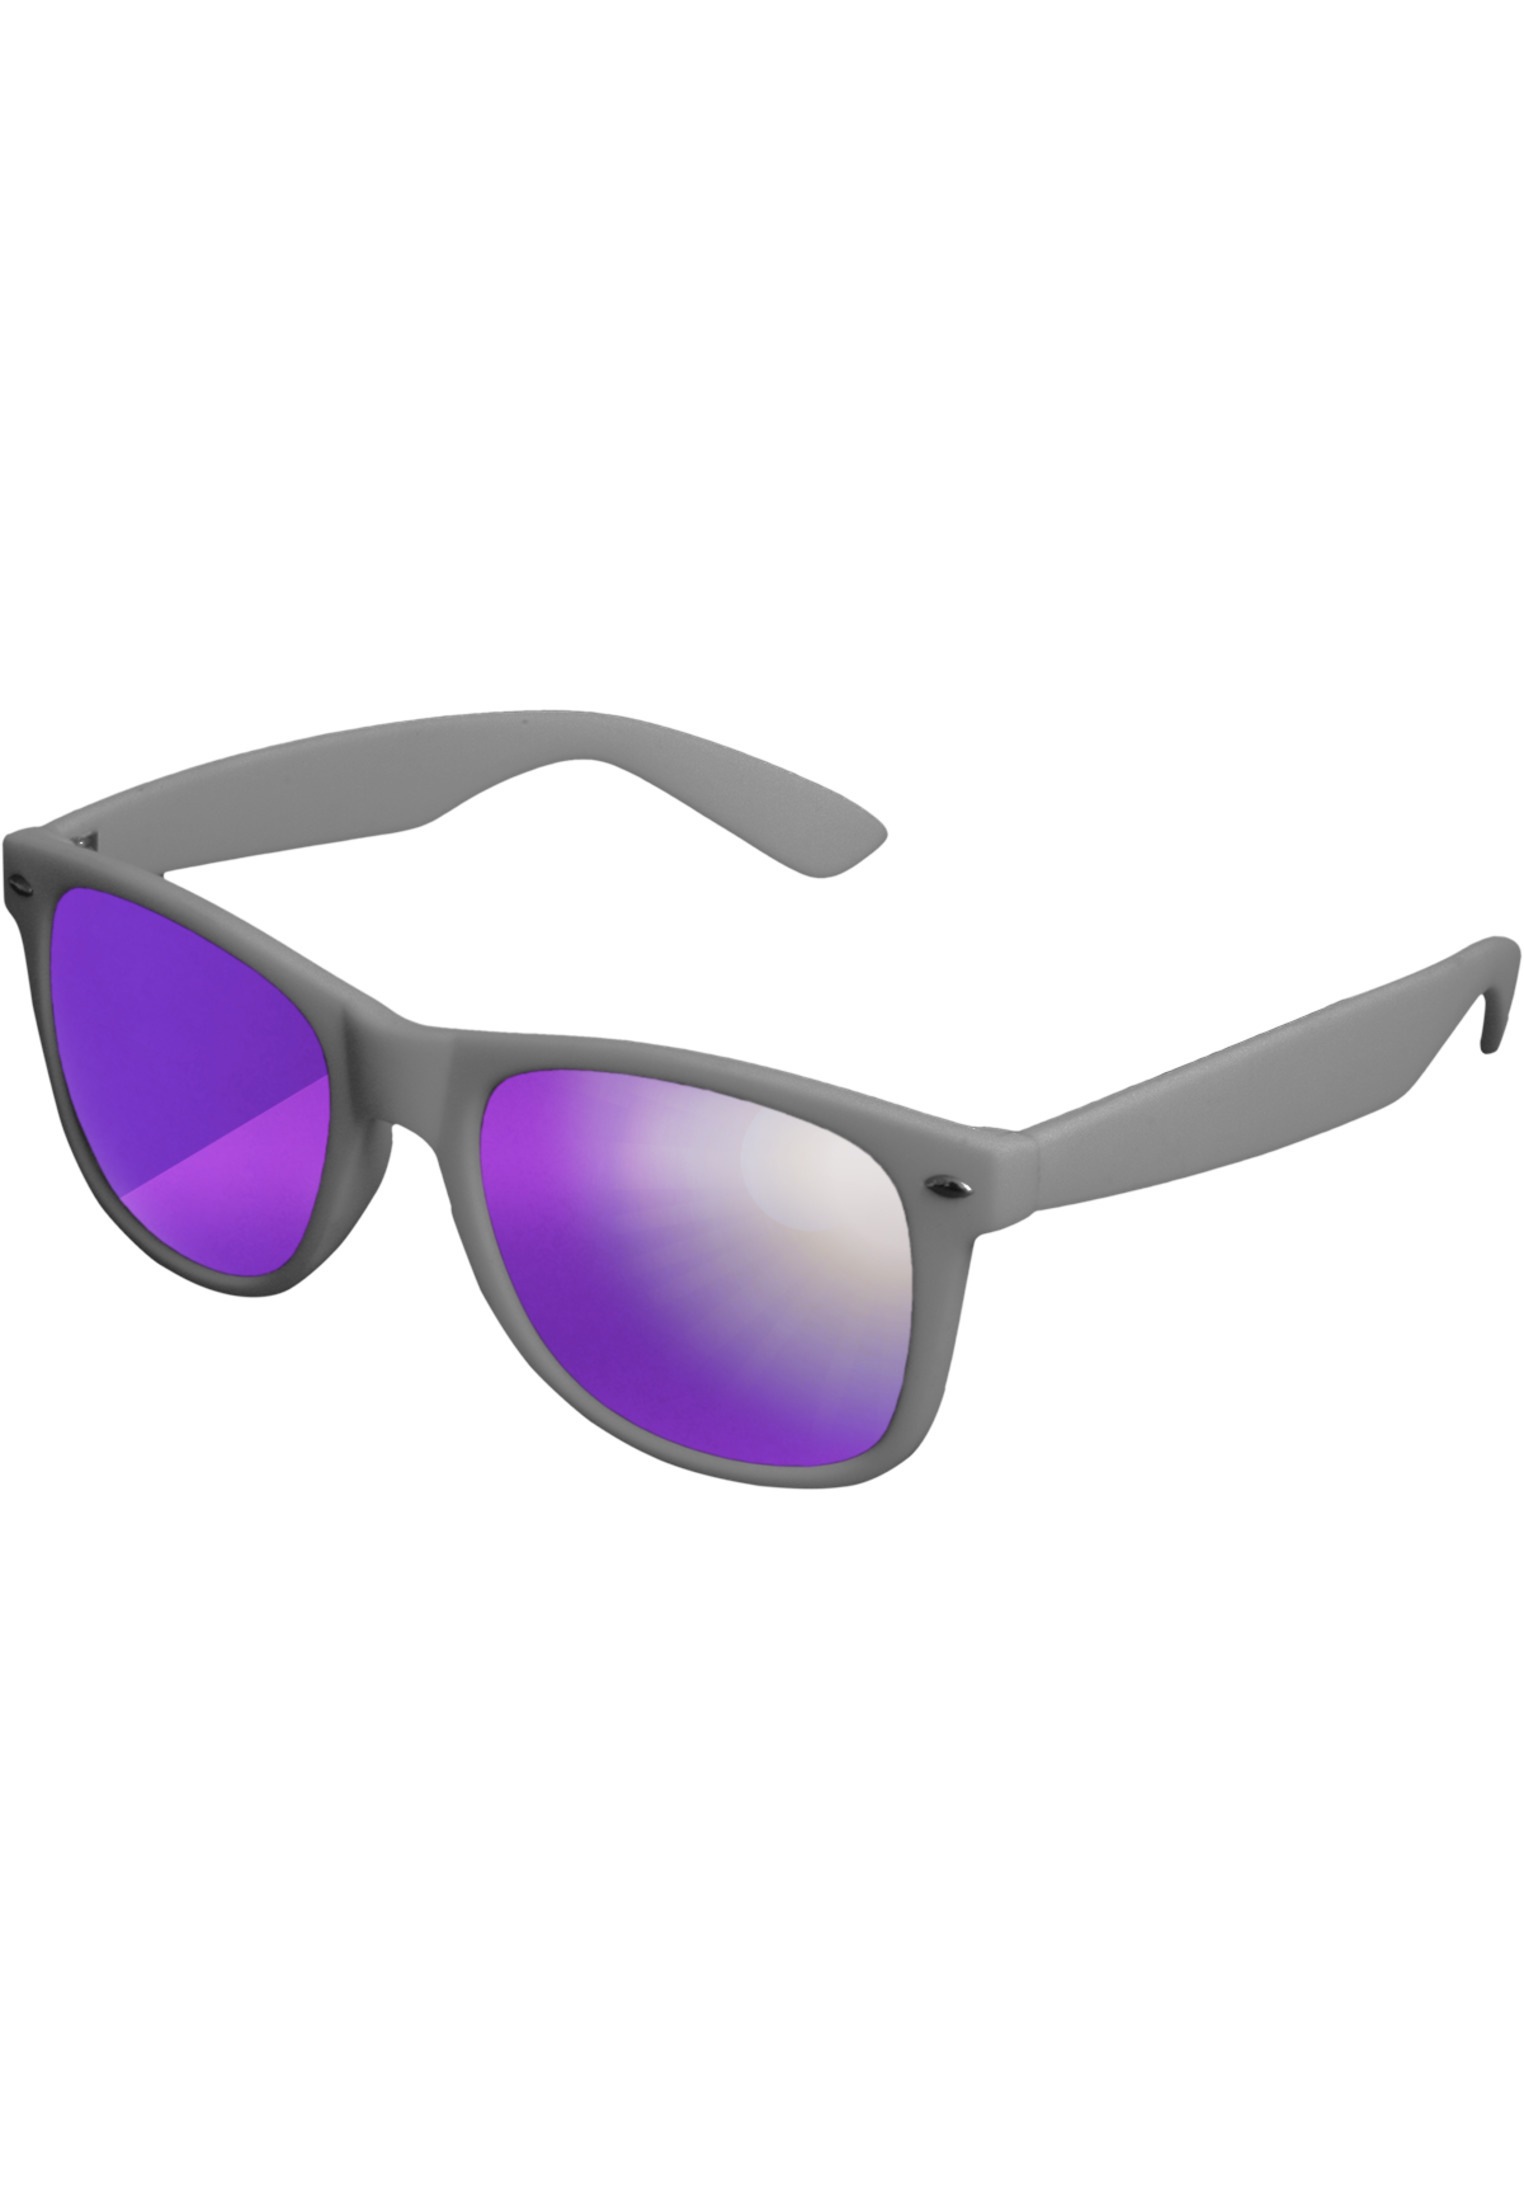 Sunglasses Likoma MSTRDS »Accessoires online BAUR | Mirror« bestellen Sonnenbrille